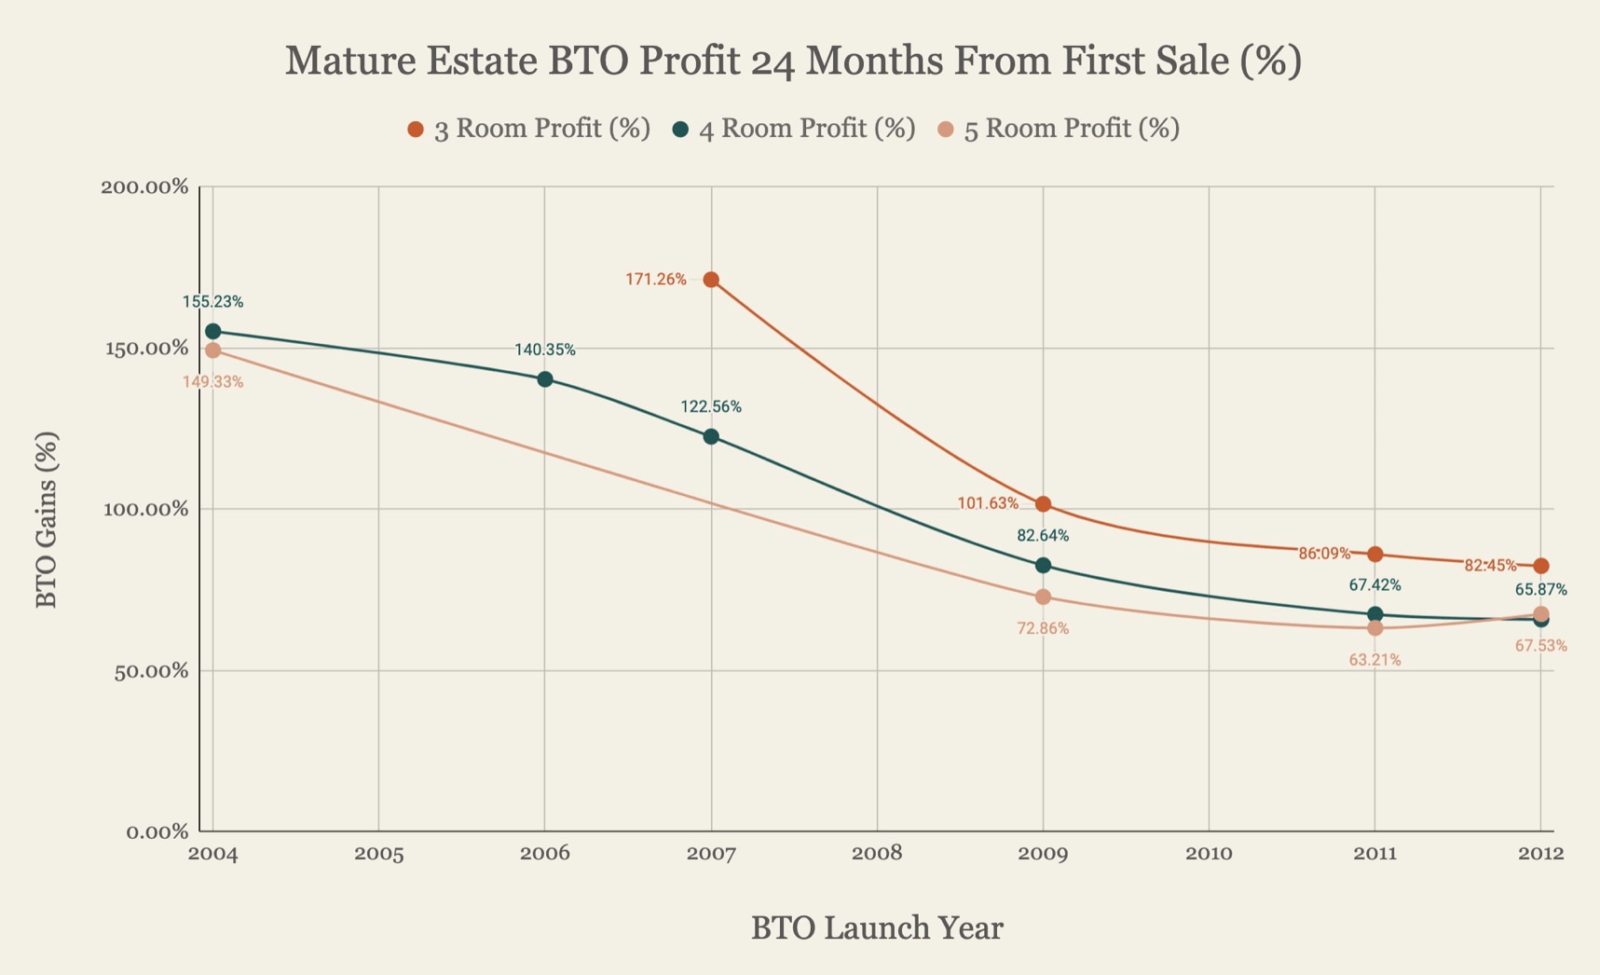 Mature estate BTO profits